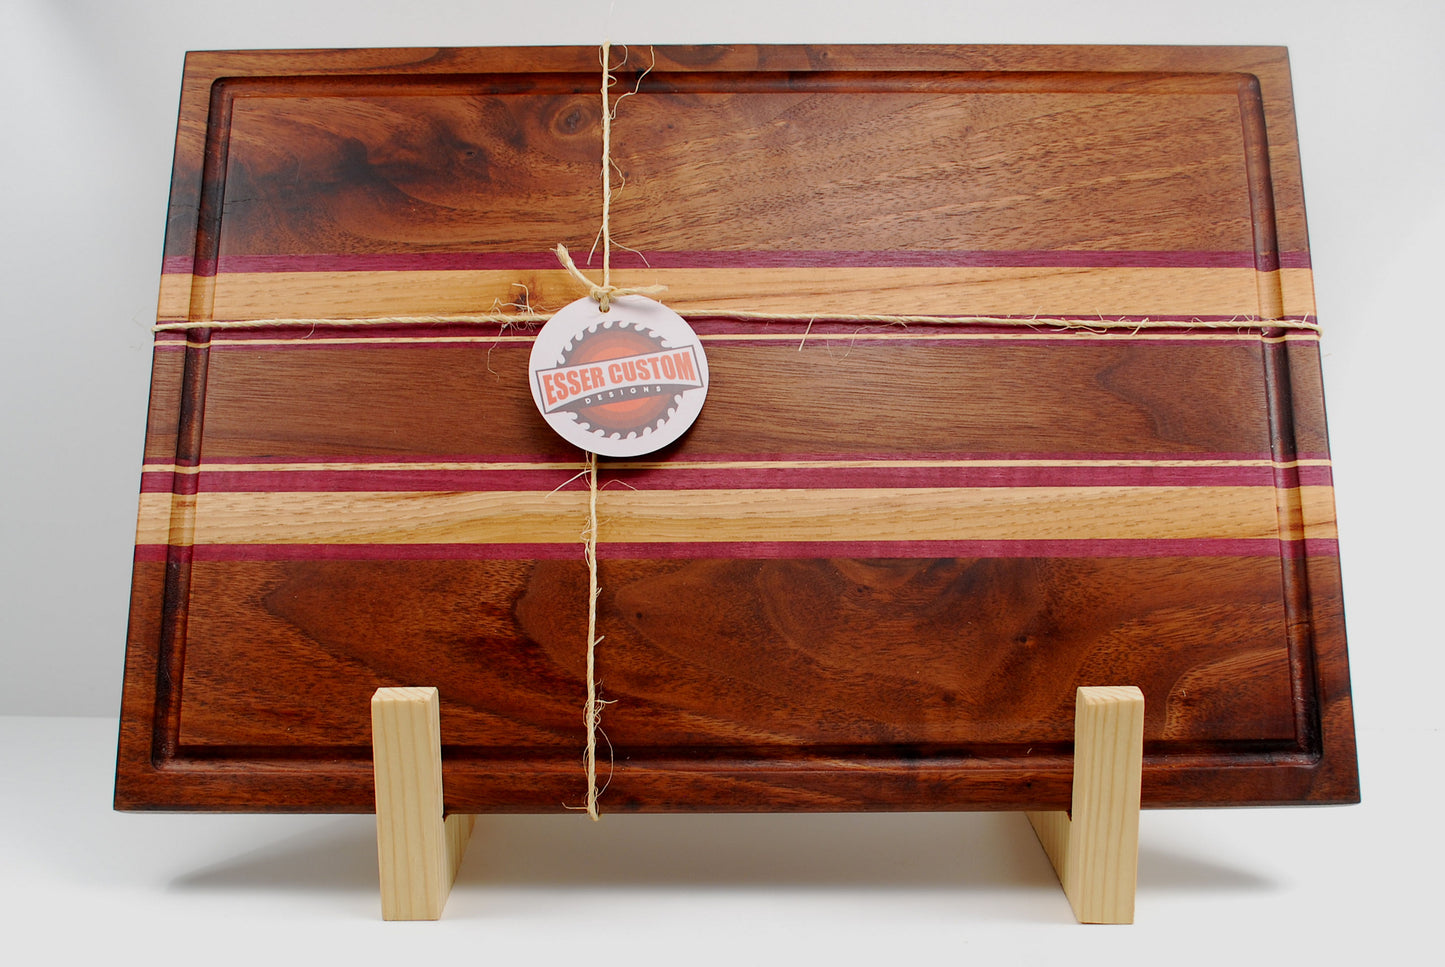 Wood Cutting Board - Walnut, Purple Heart and Ash Wood